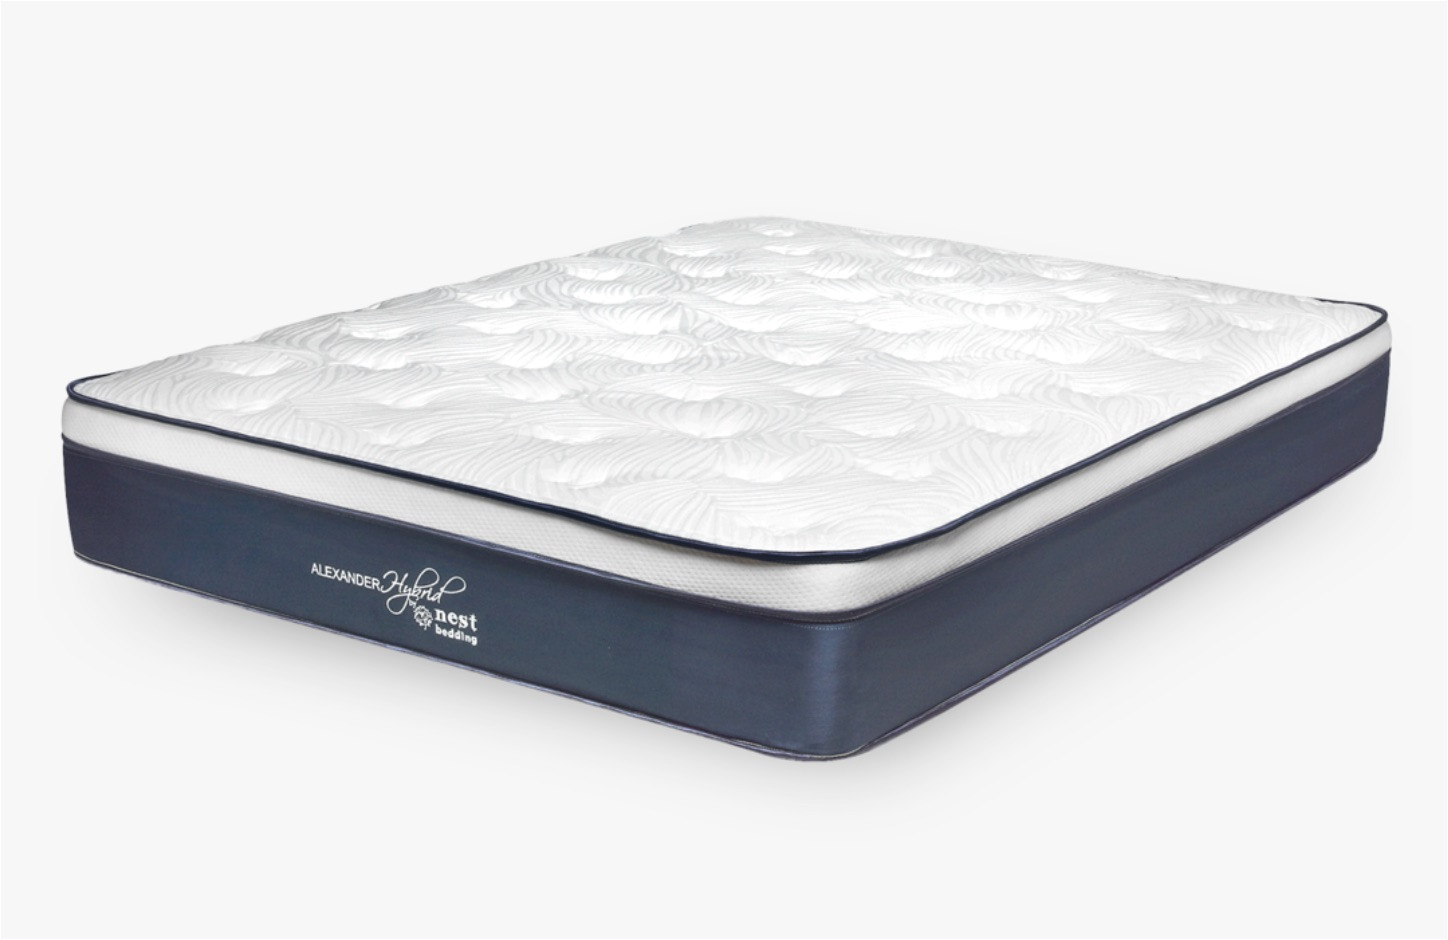 palo alto recycling foam mattress